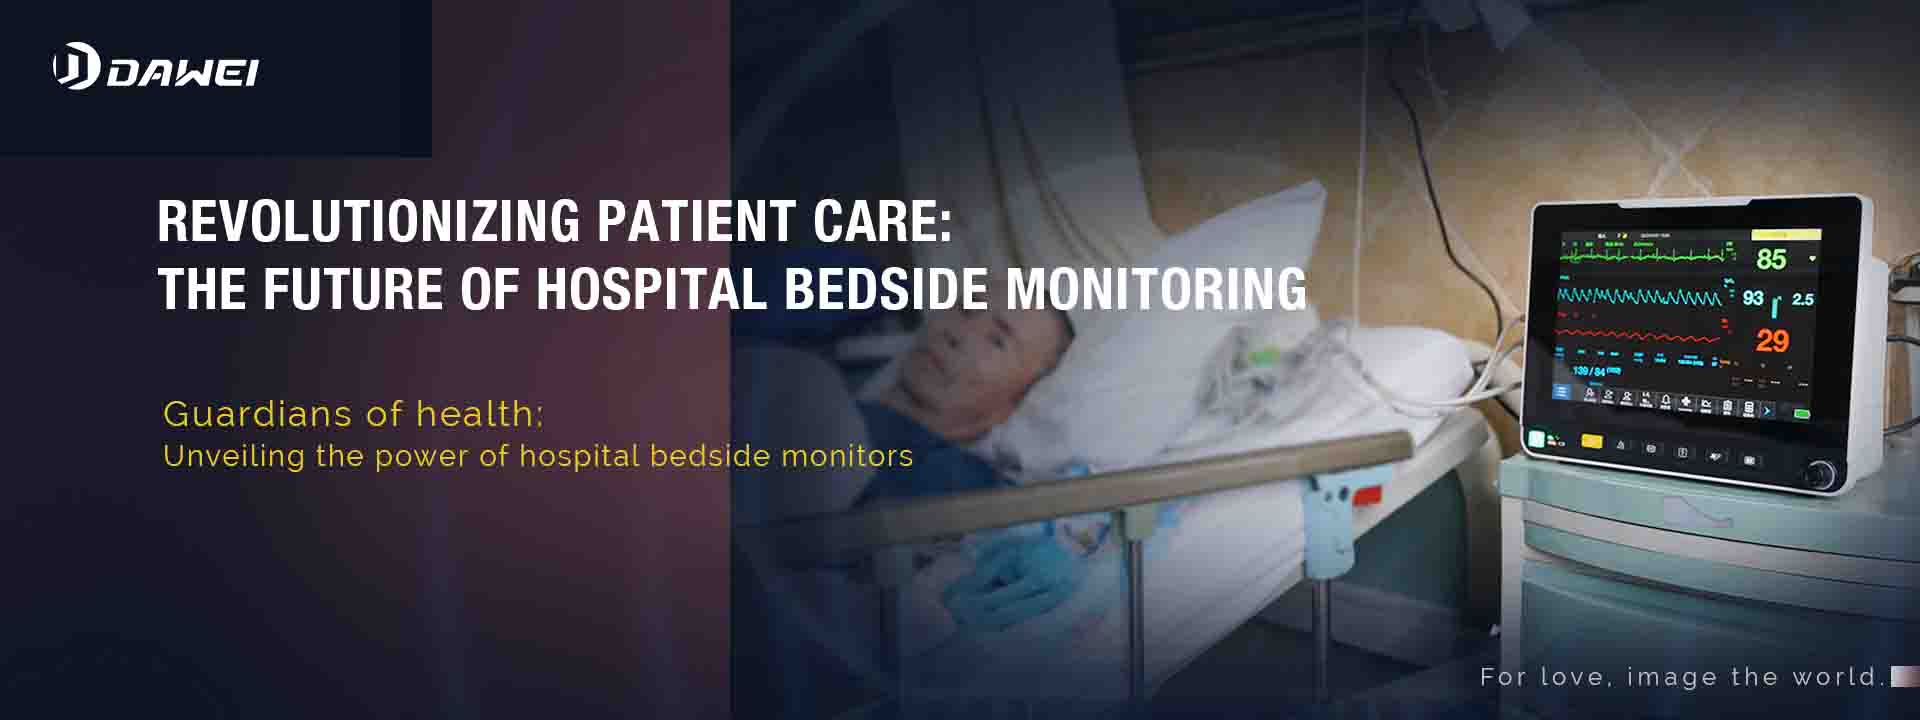 https://www.ultrasounddawei.com/patient-monitor/